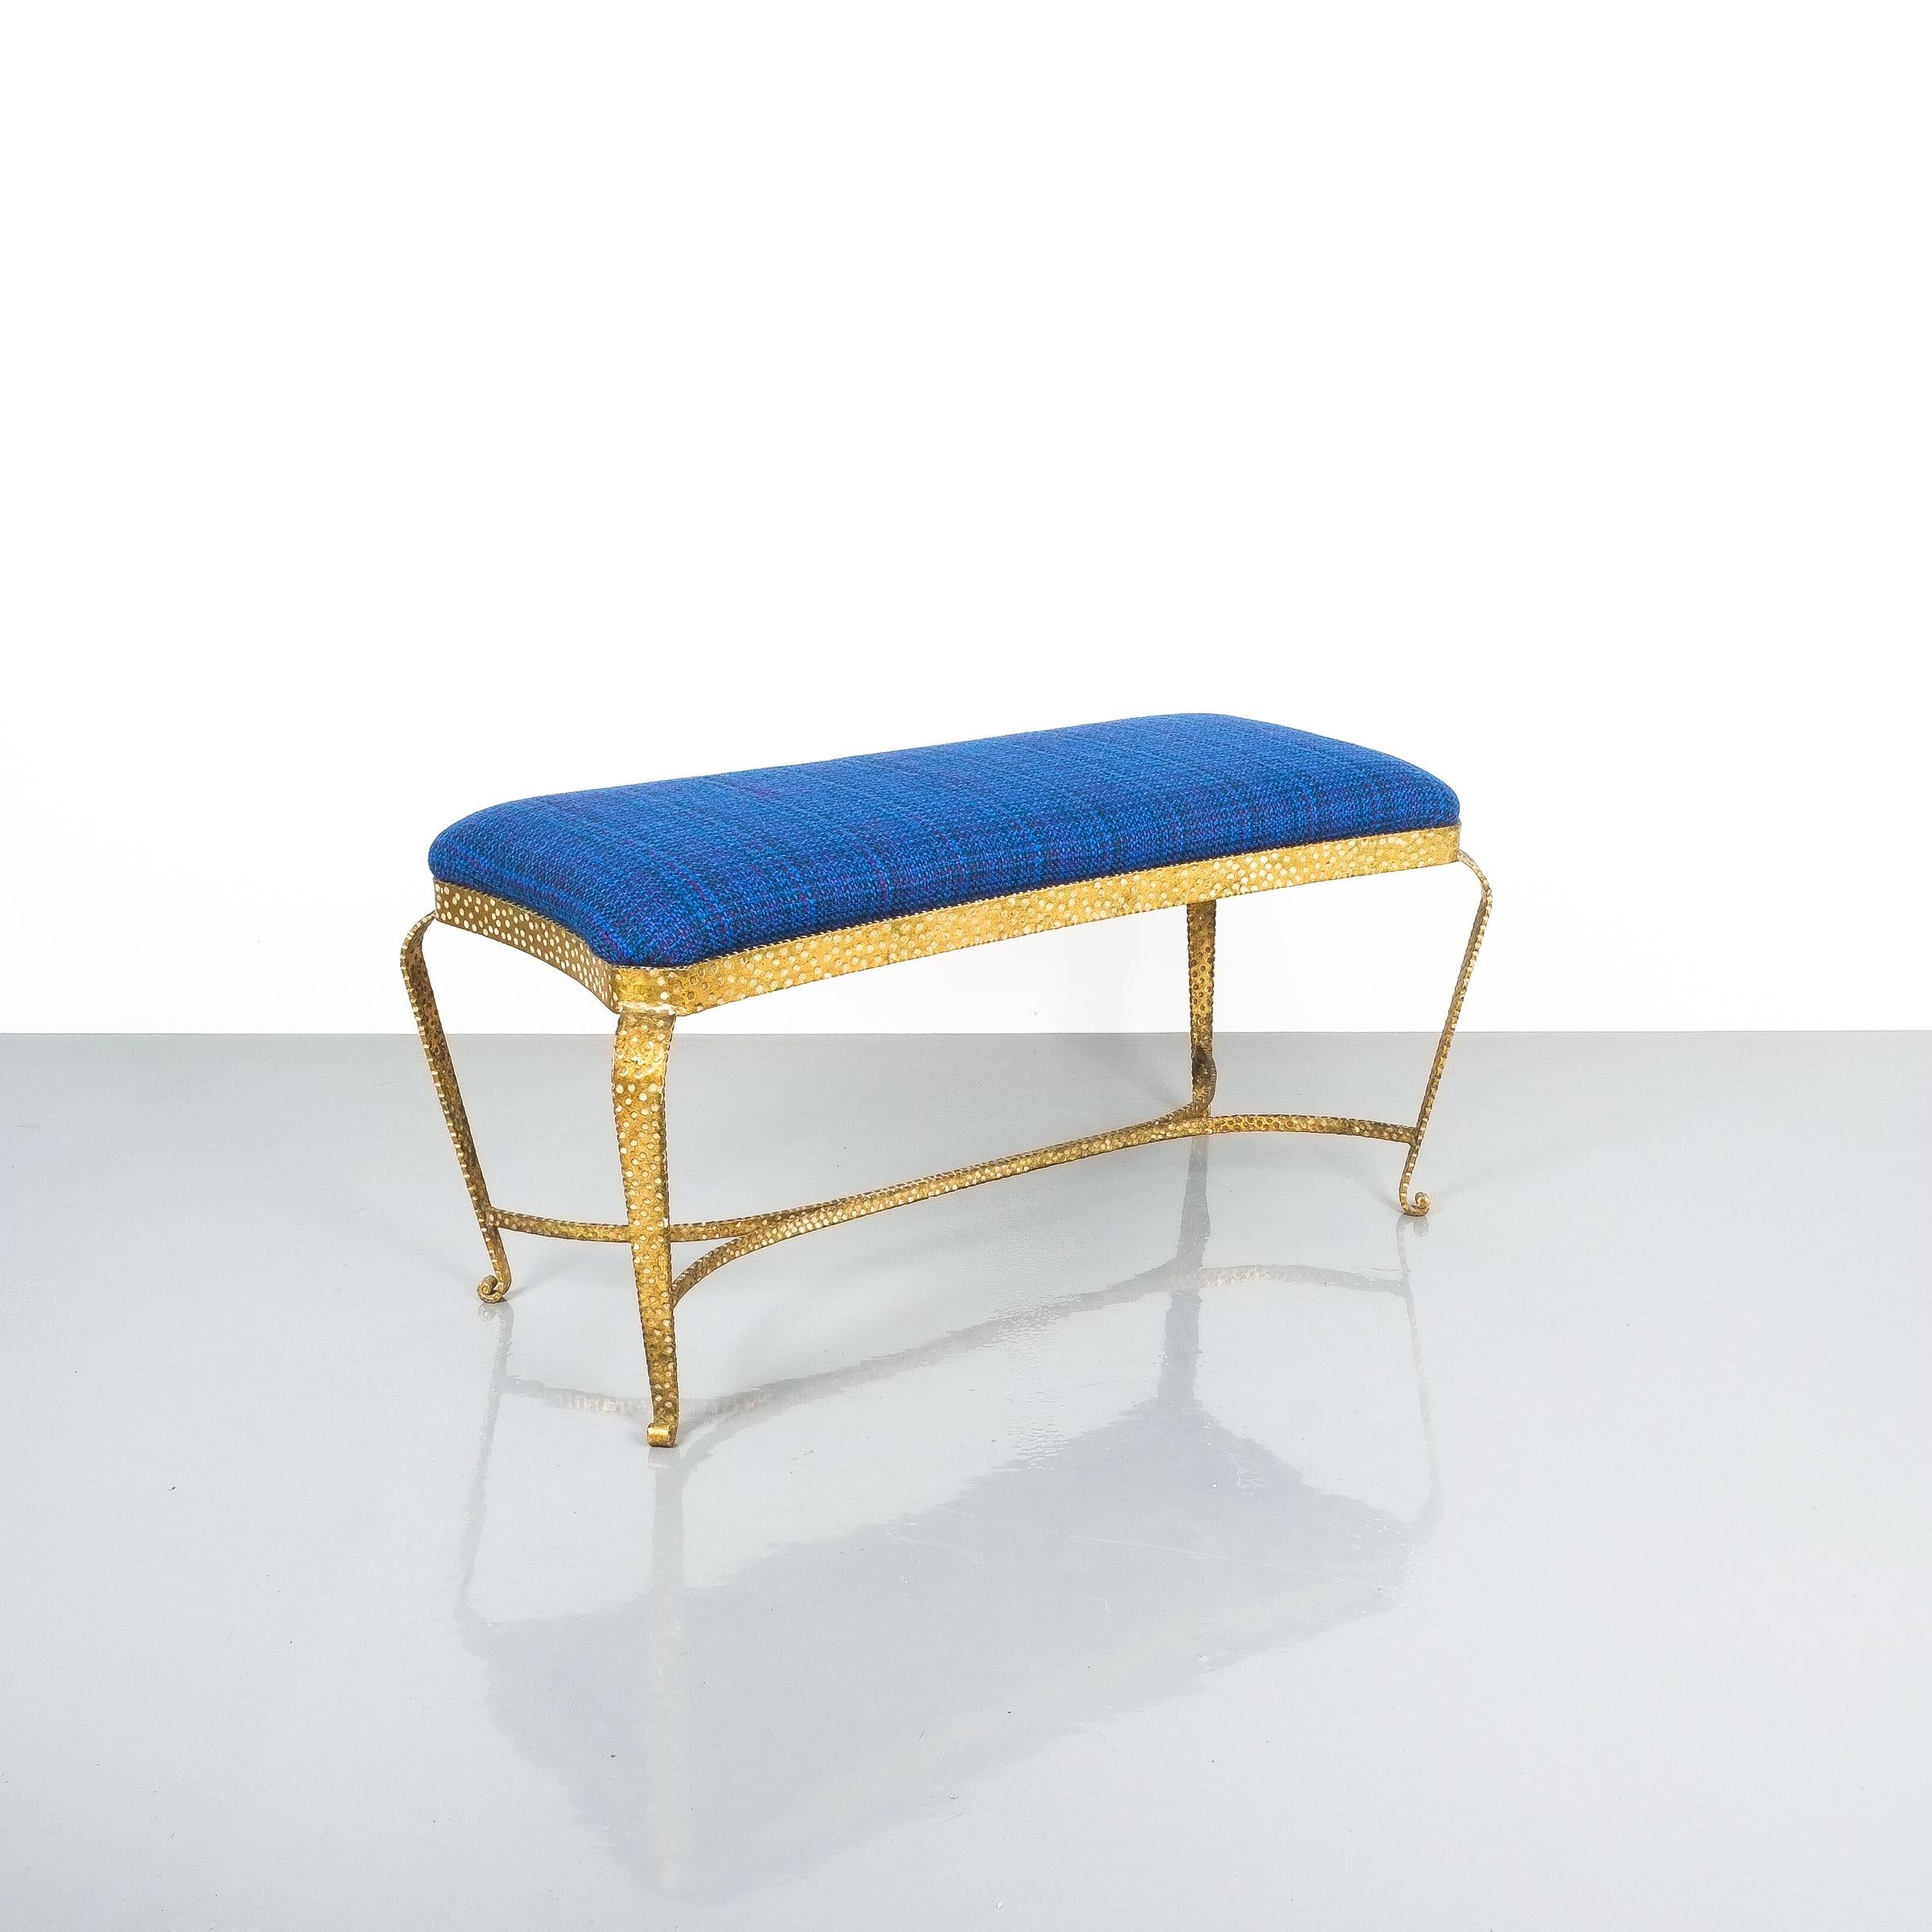 Pier Luigi Colli gold iron bedroom bench blue fabric, Italy, 1950. Large 34